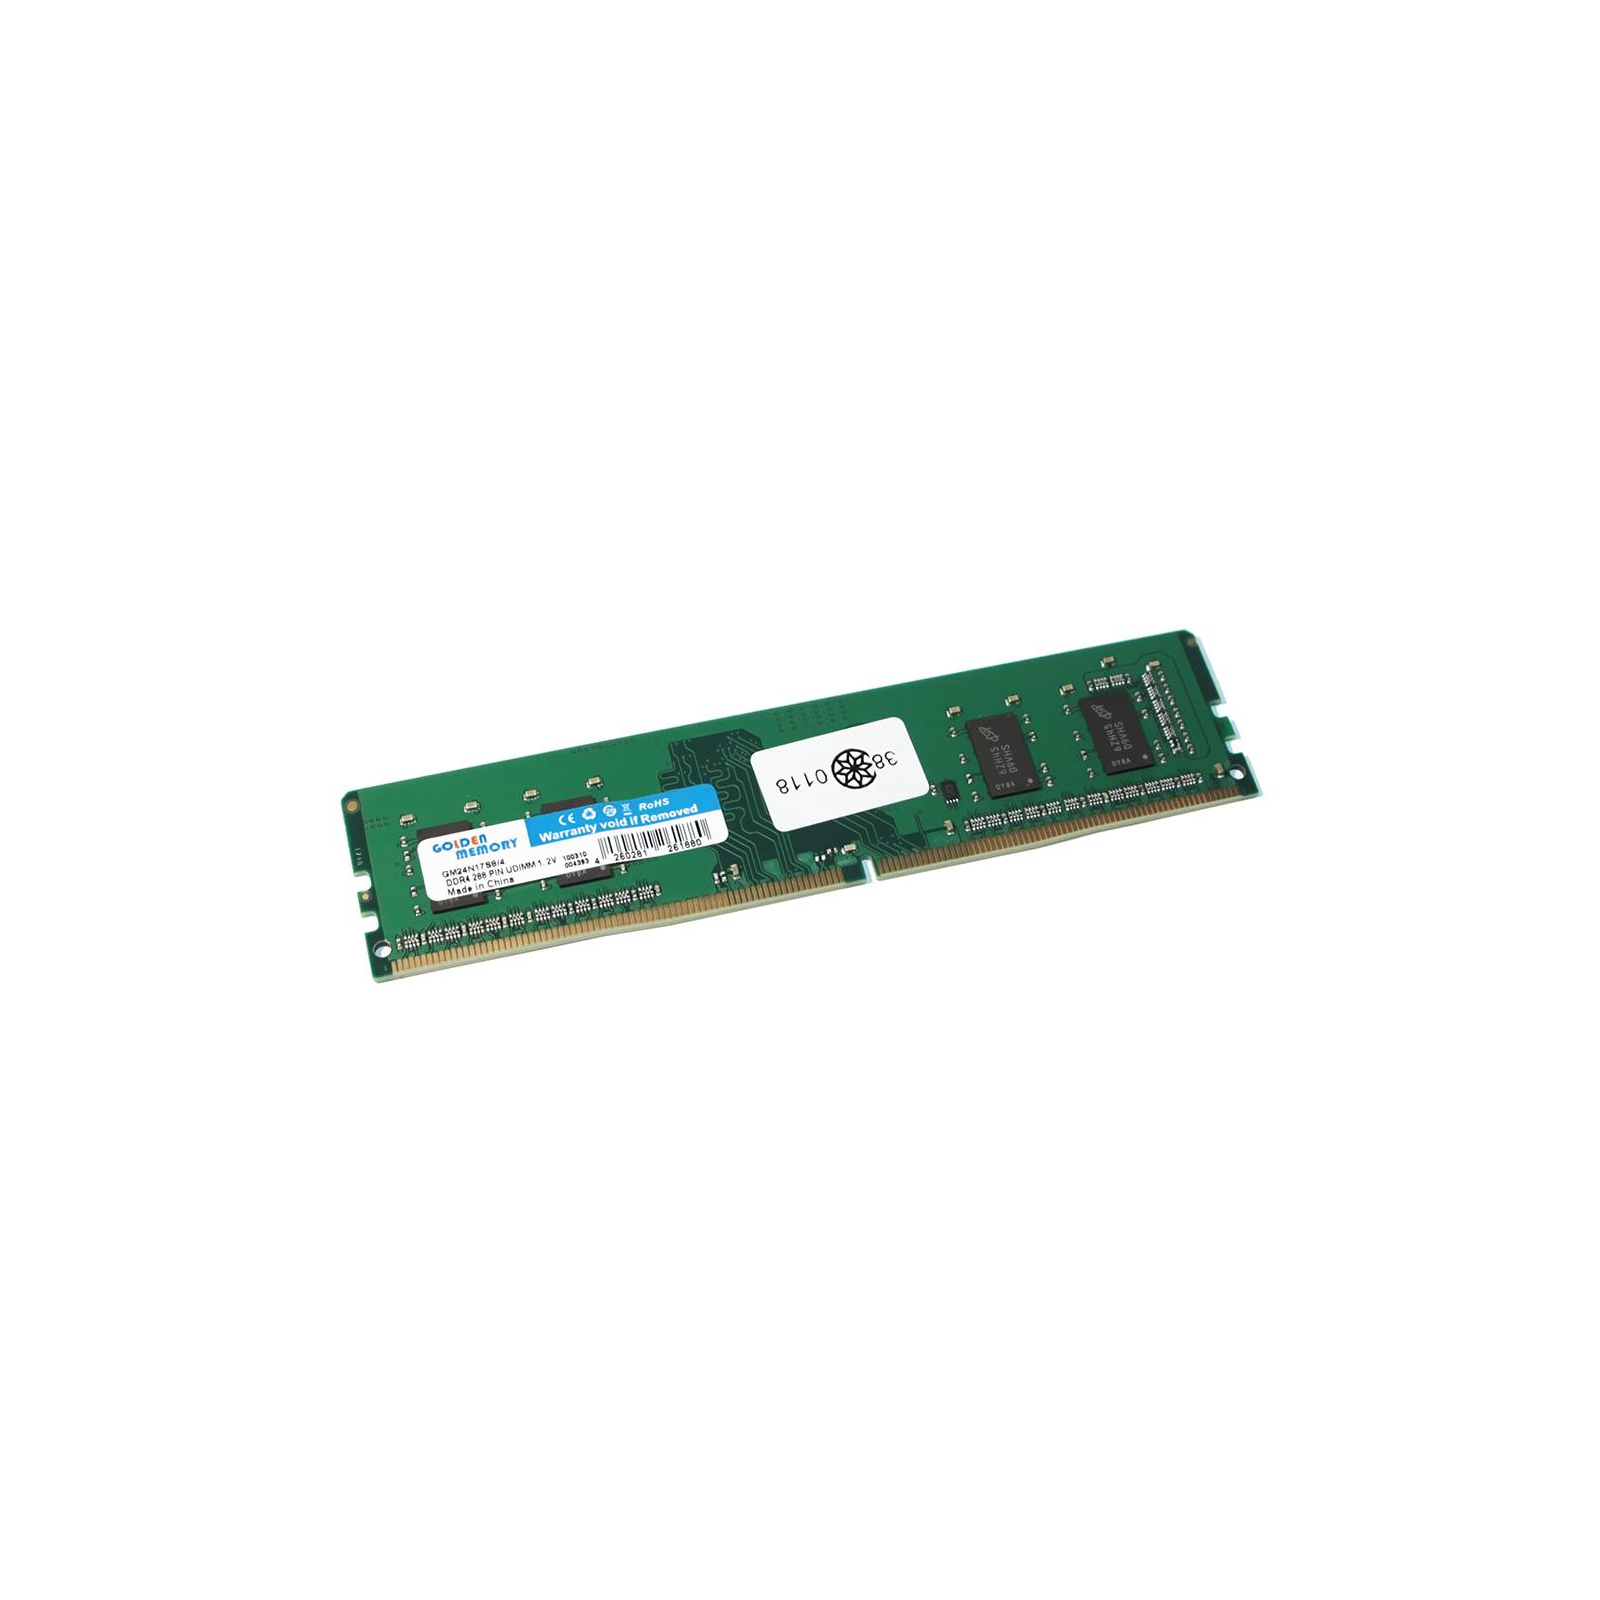 Модуль памяти для компьютера DDR4 4GB 2400 MHz Golden Memory (GM24N17S8/4)